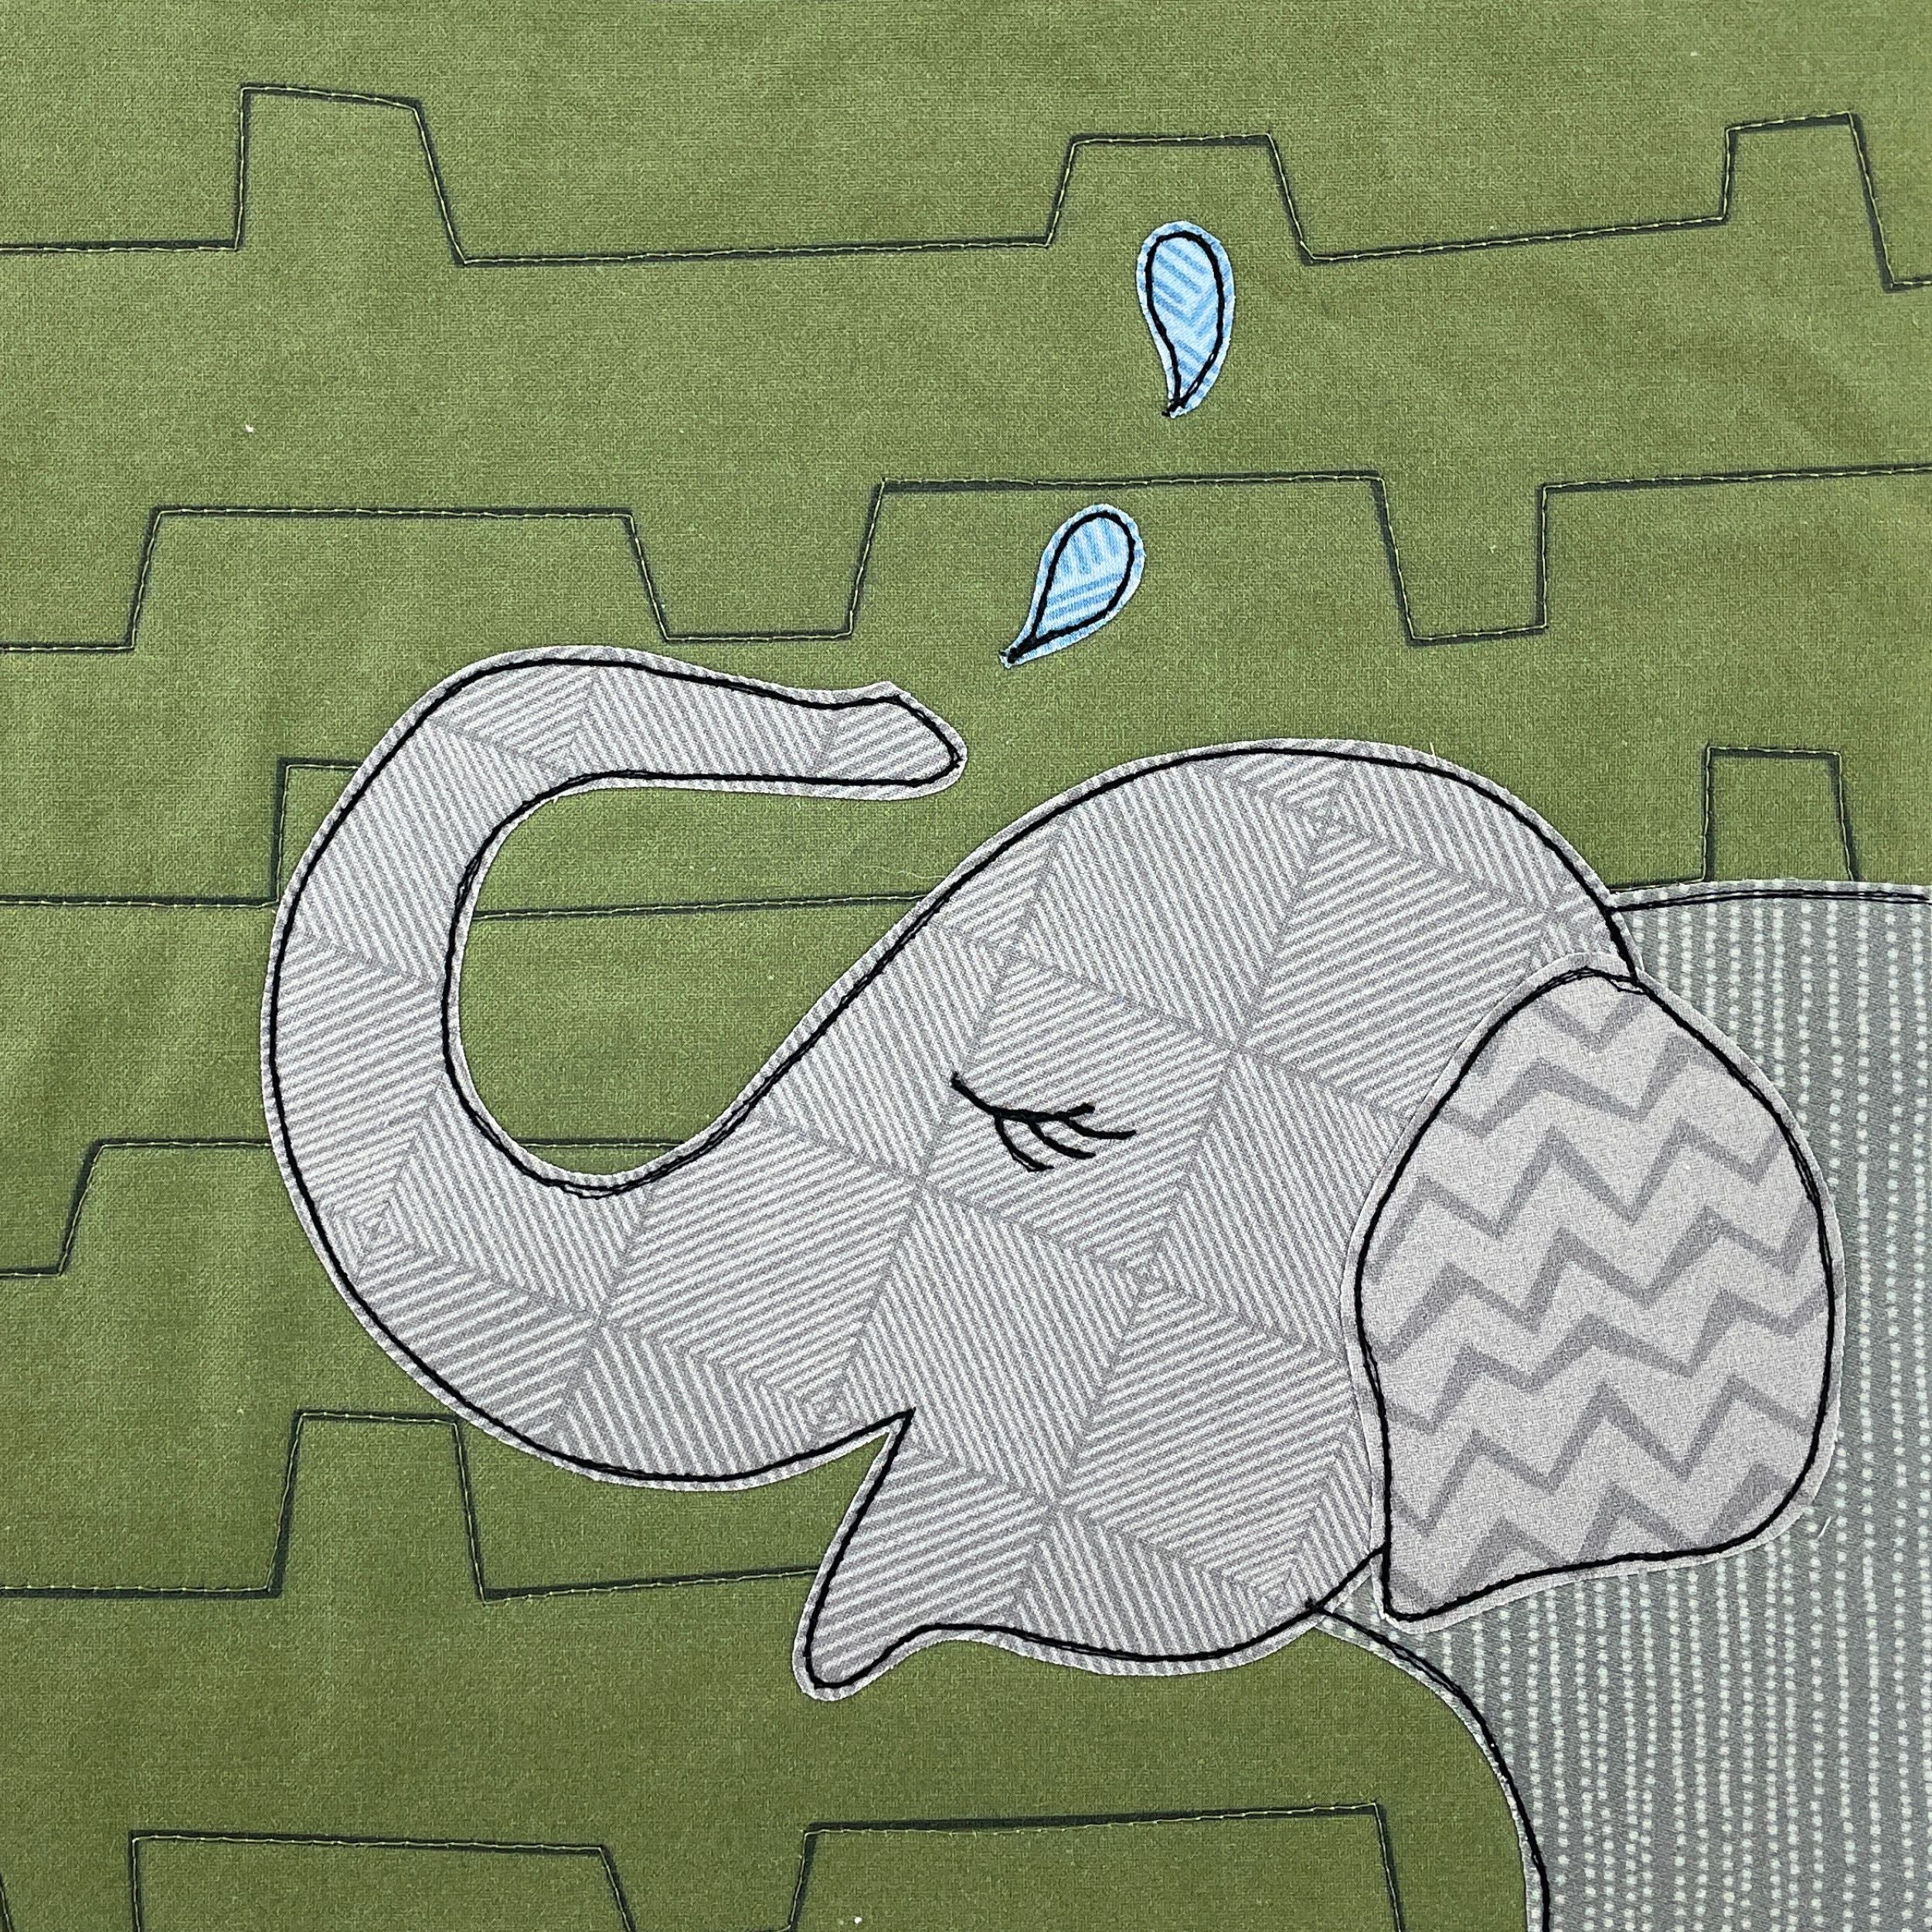 Ellen Elephant Applique Pattern